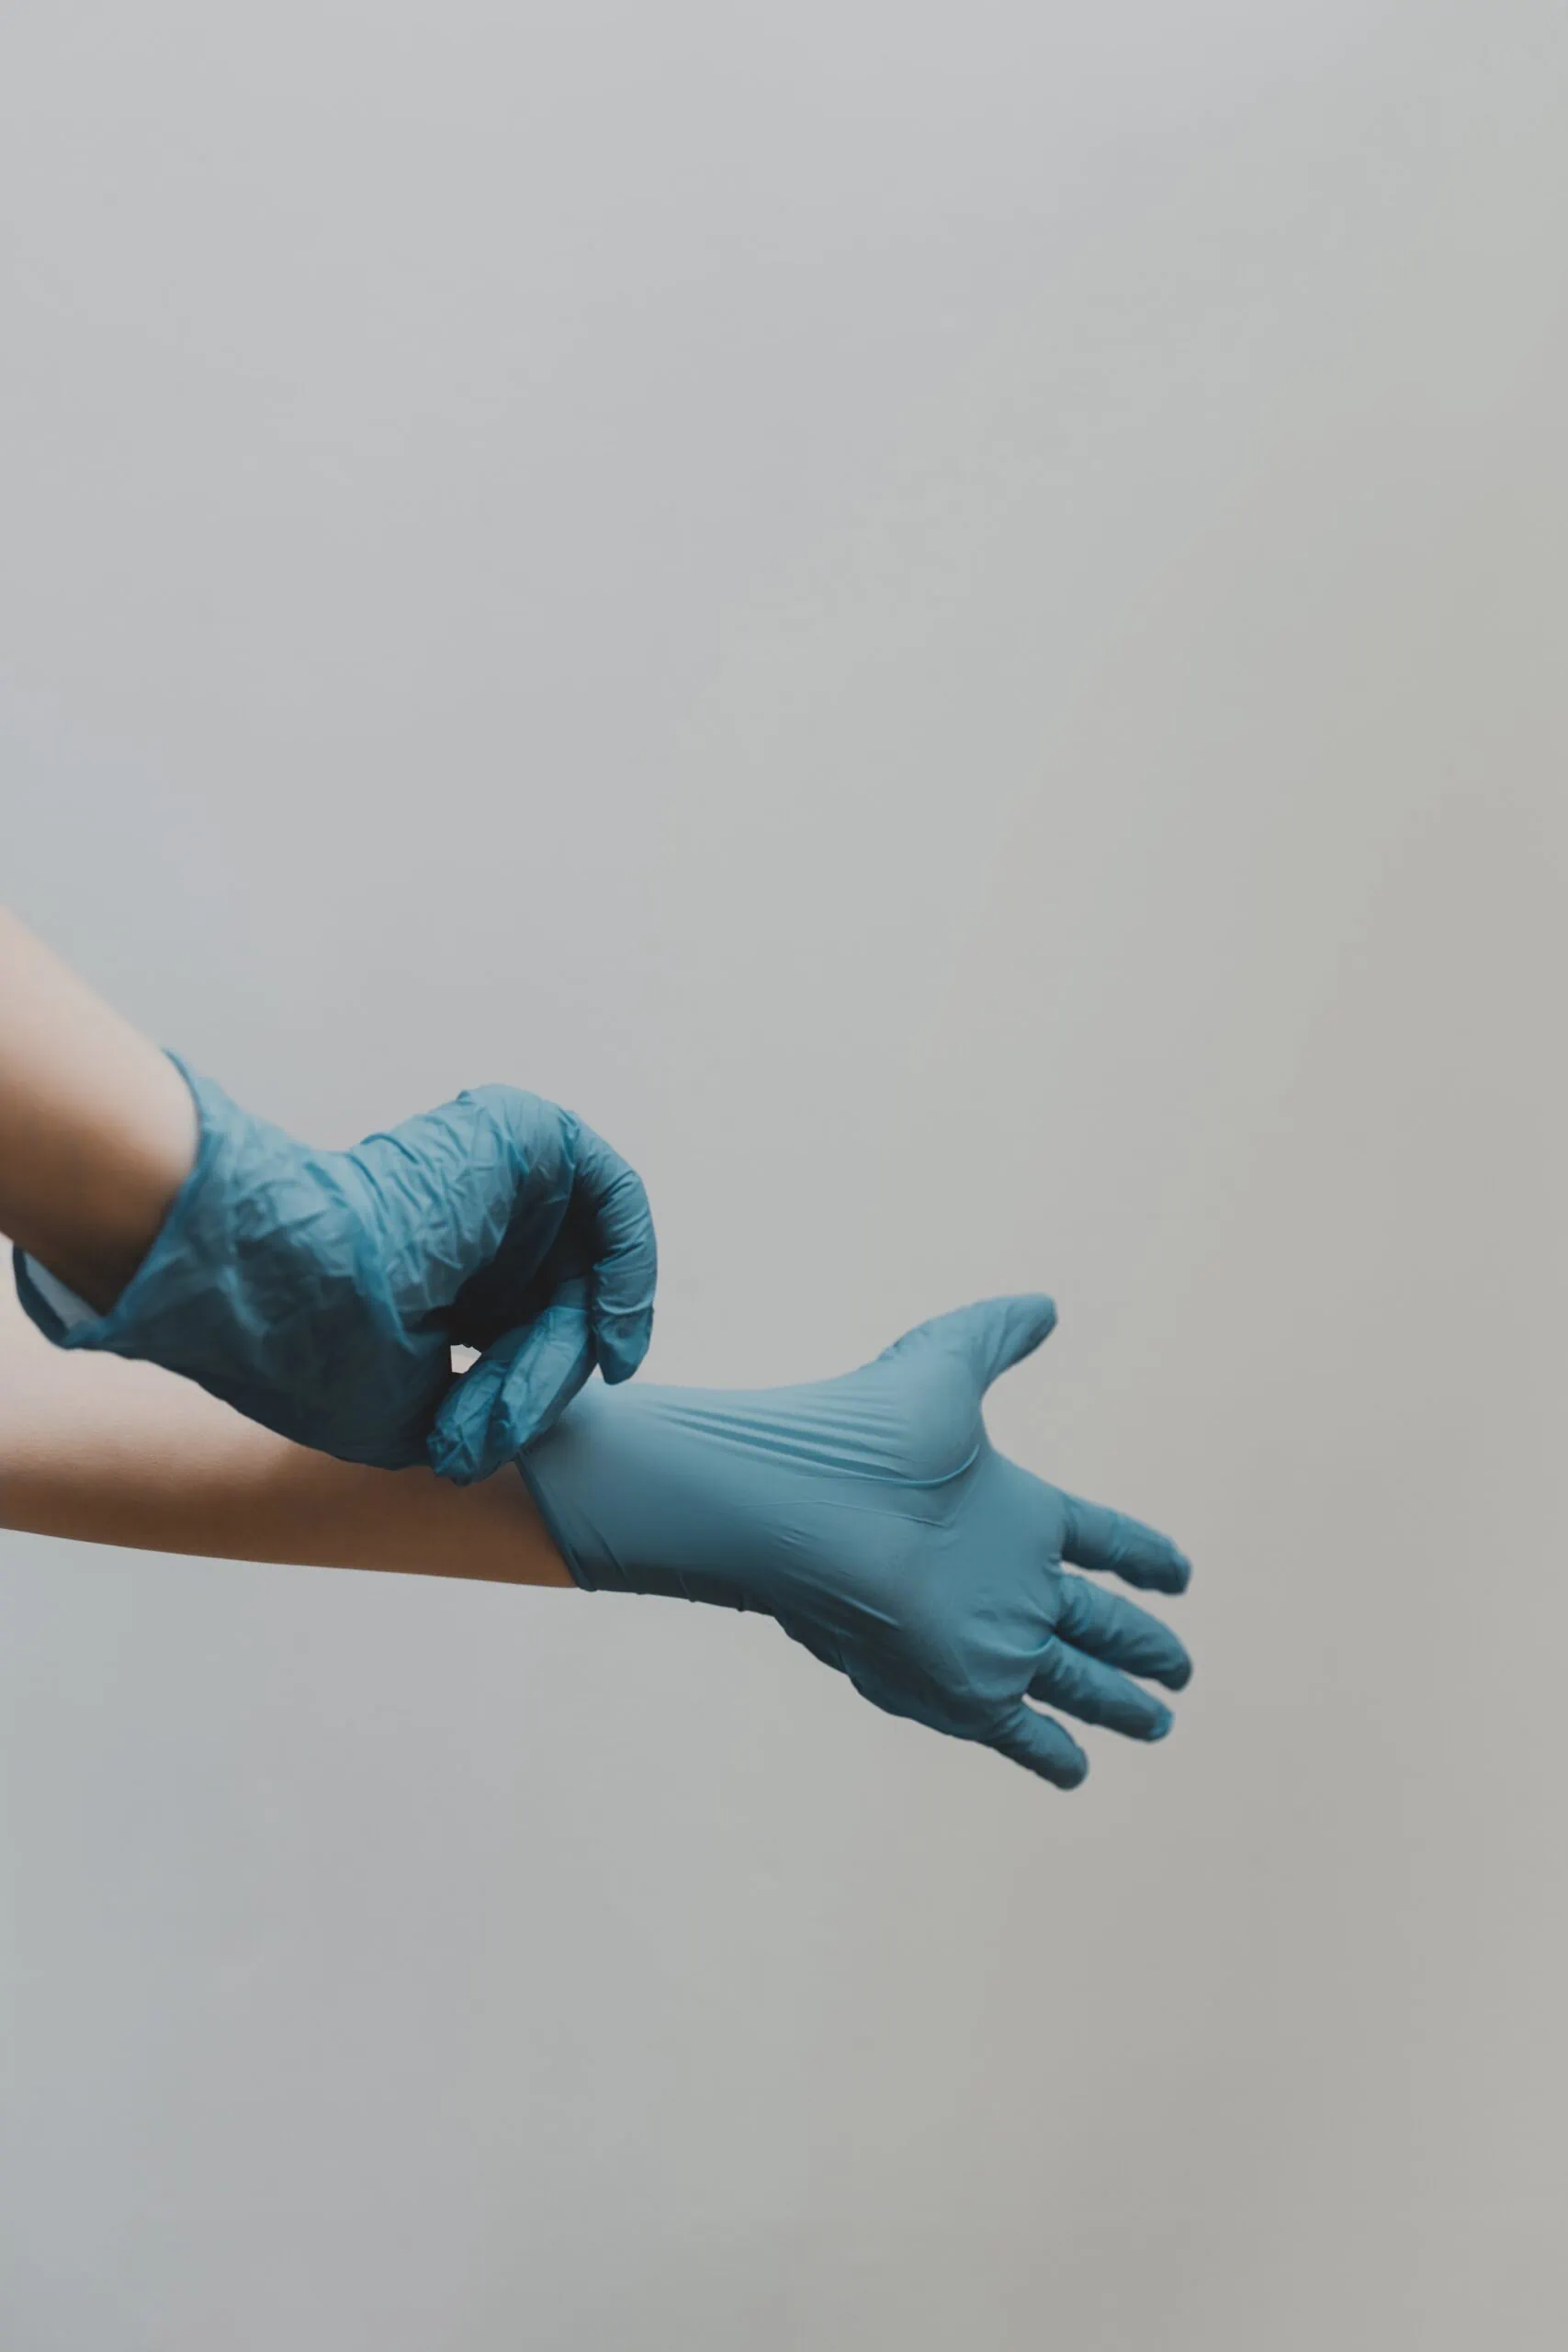 Doctor putting on gloves in hospital safe with hospital cameras